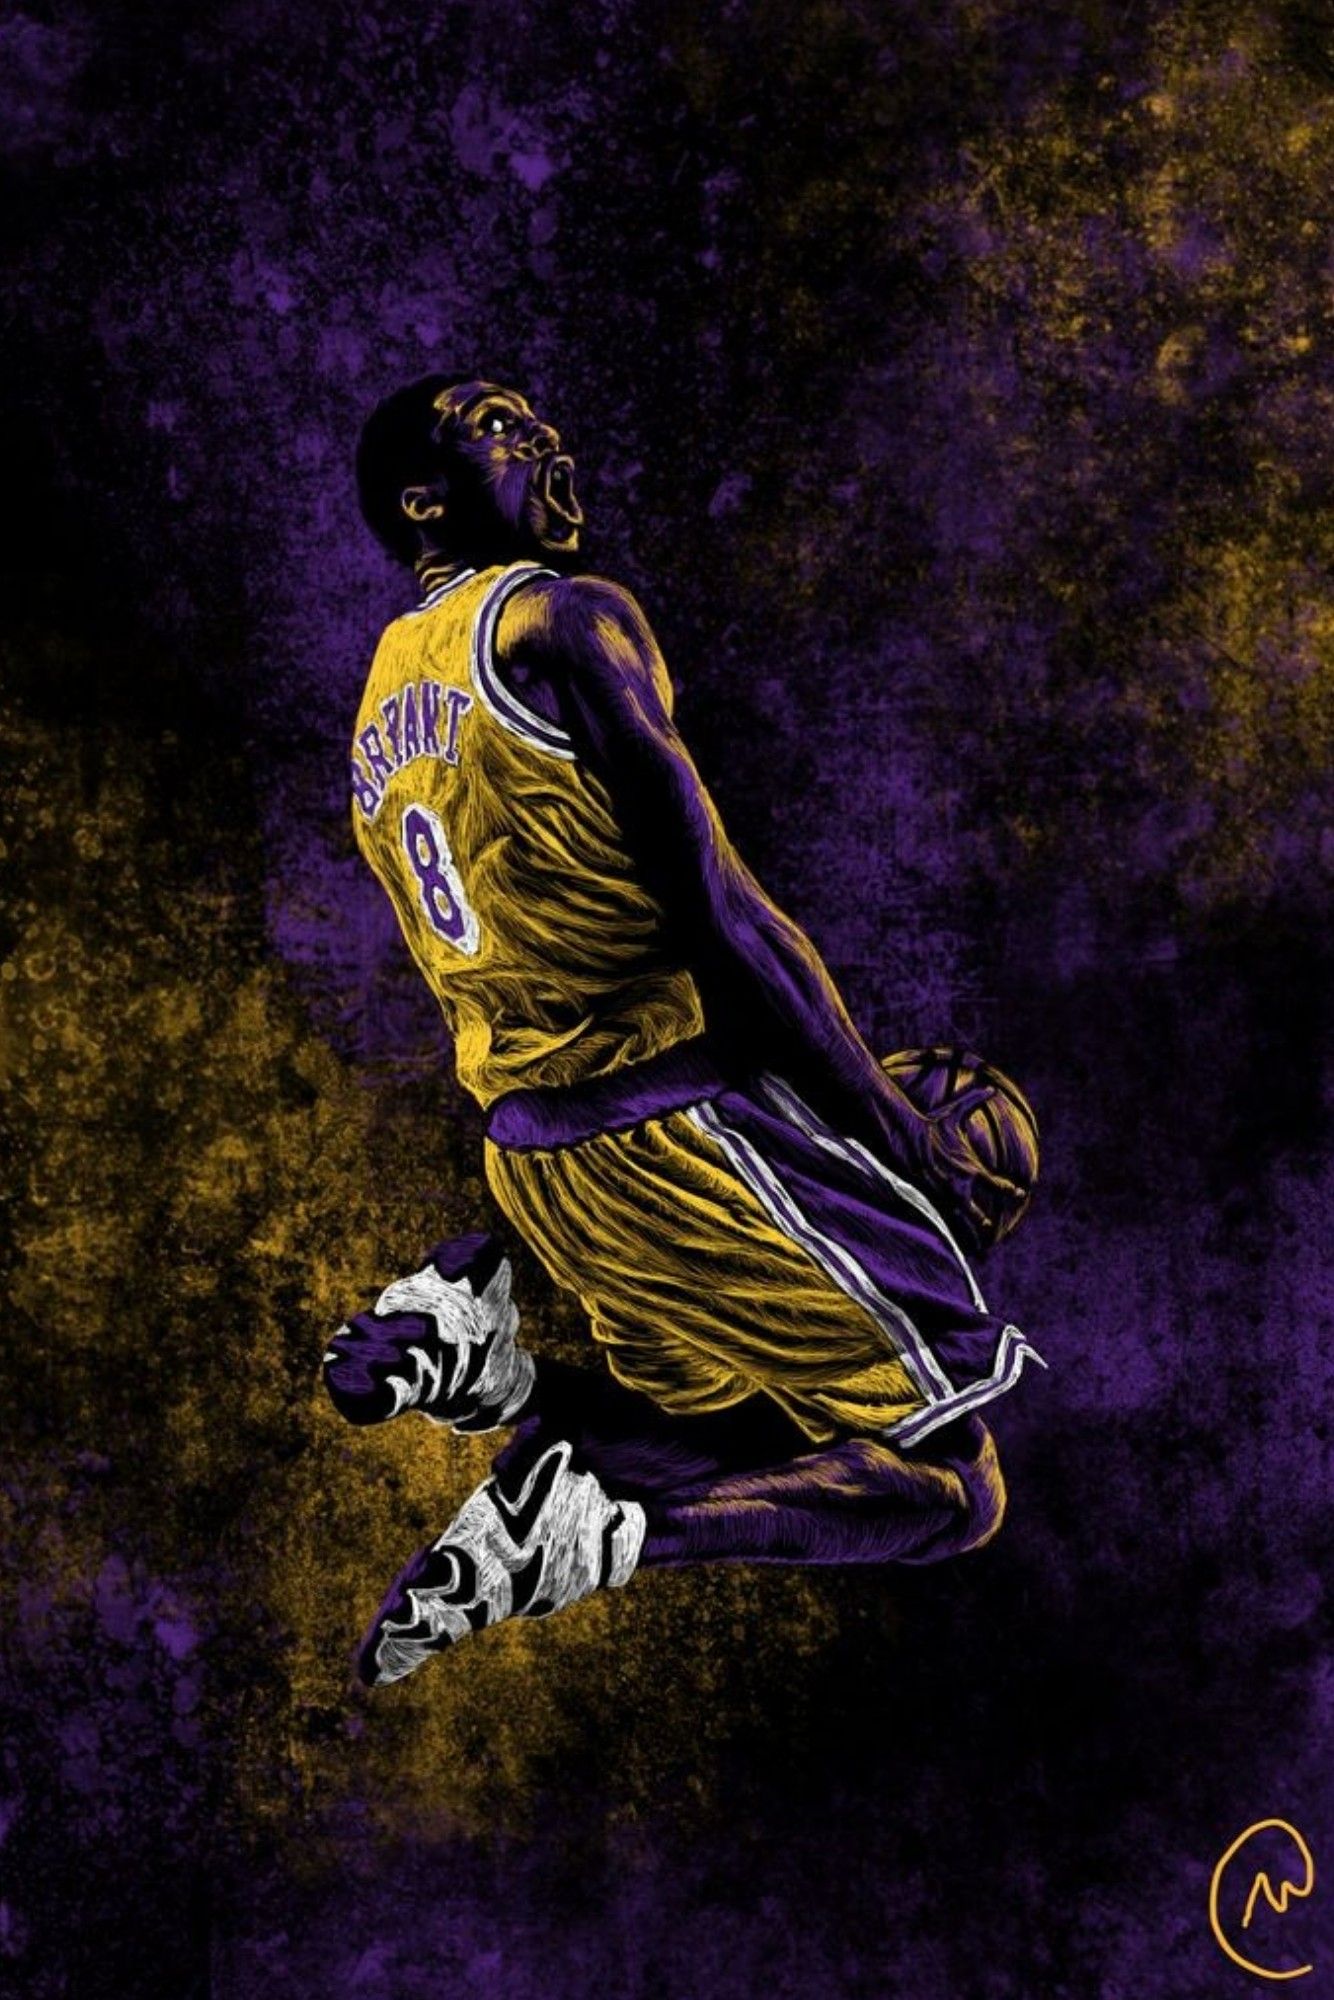 Kobe Bryant. Kobe bryant wallpaper, Kobe bryant nba, Kobe bryant picture